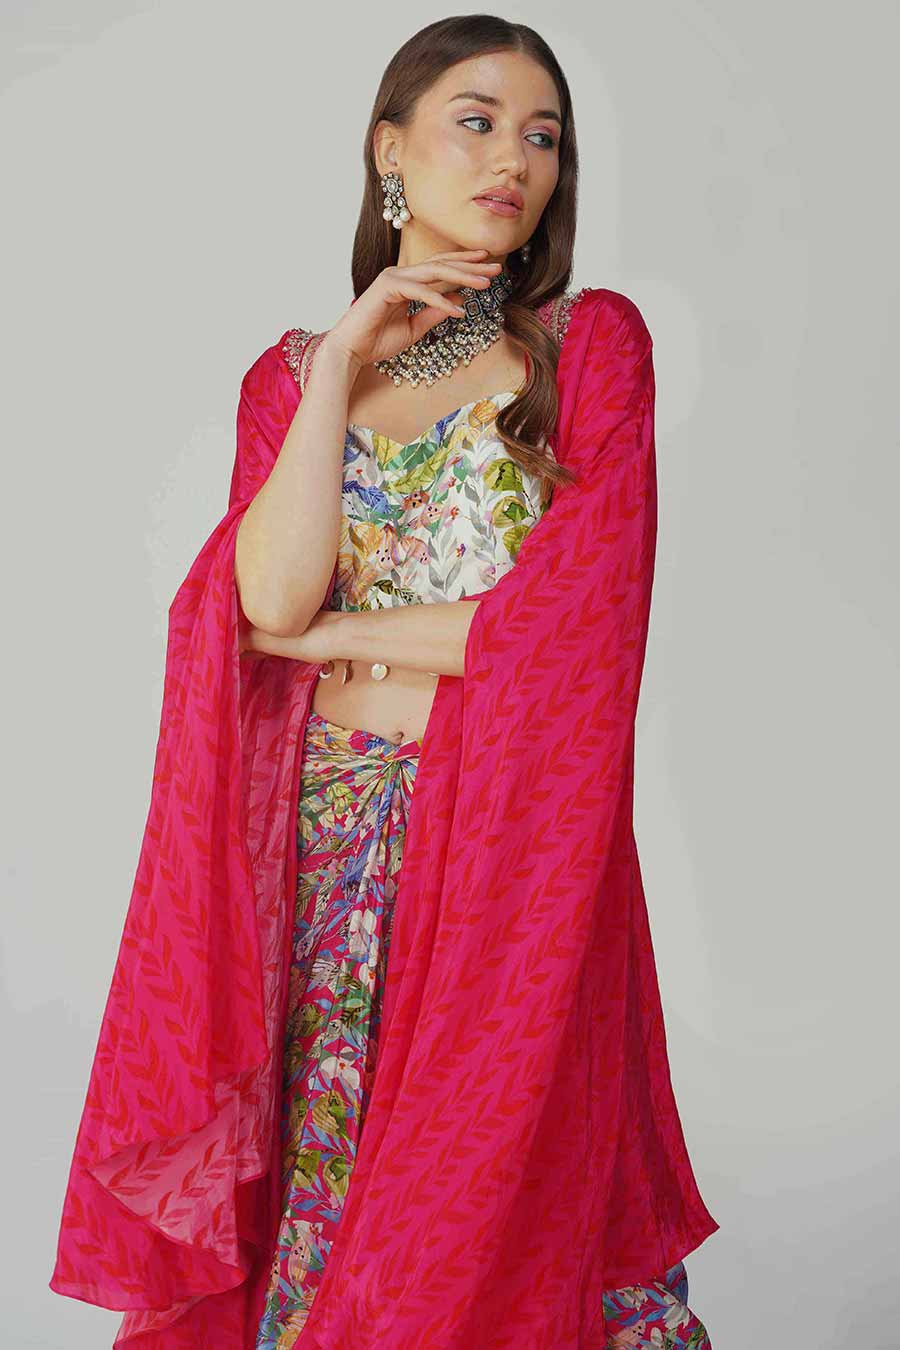 Rani Pink Leaf Printed Blouse, Skirt & Cape Set